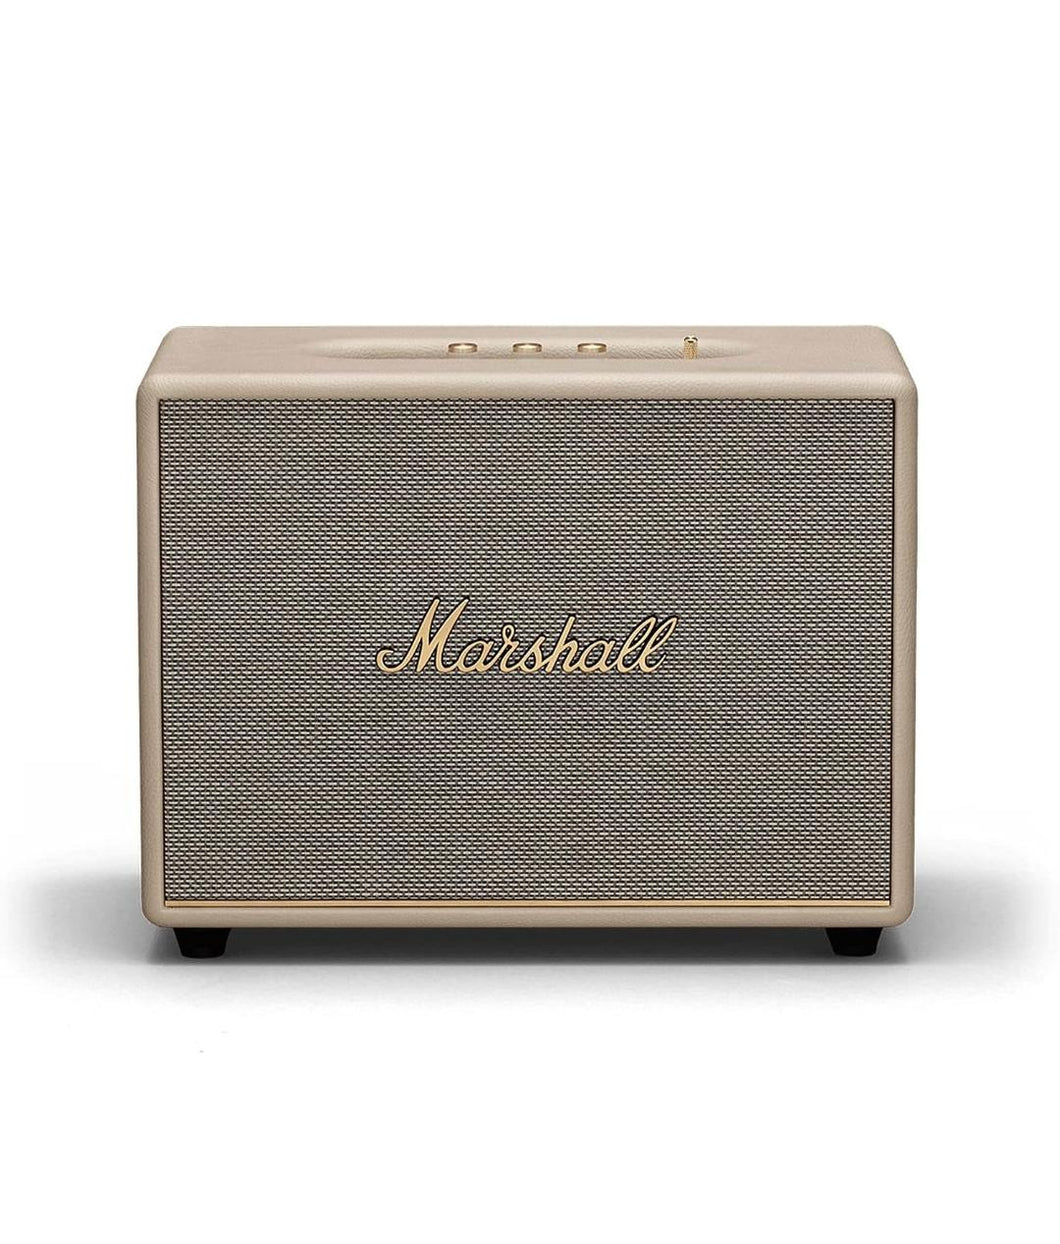 Marshall Woburn III 150 W Bluetooth Powered Speaker, Cream